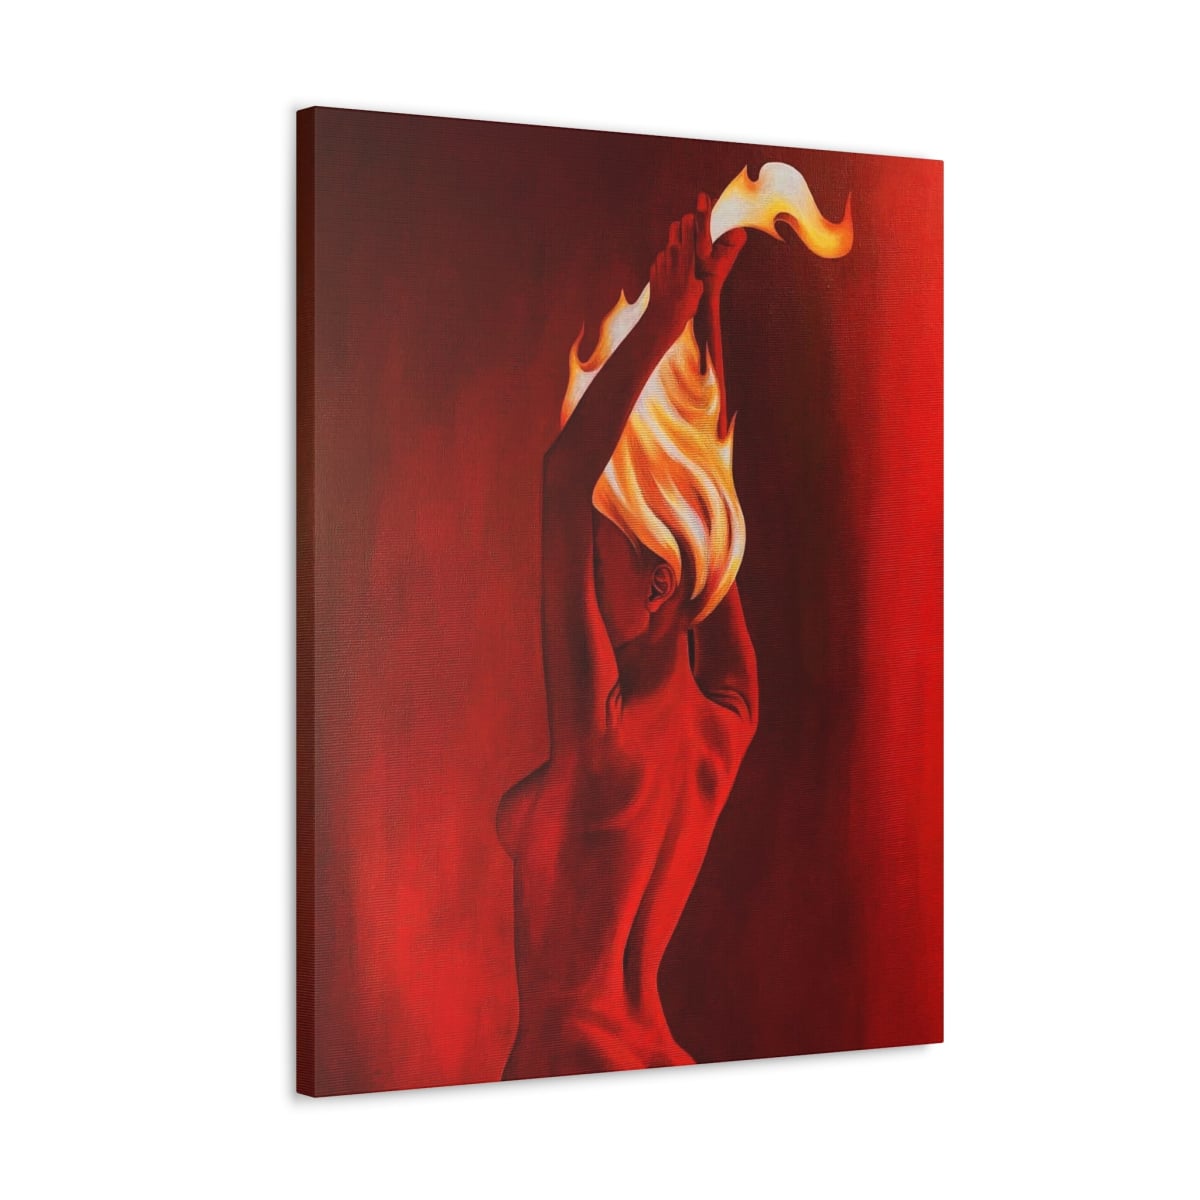 Intense Red Fire Artwork - Sensuous Decor